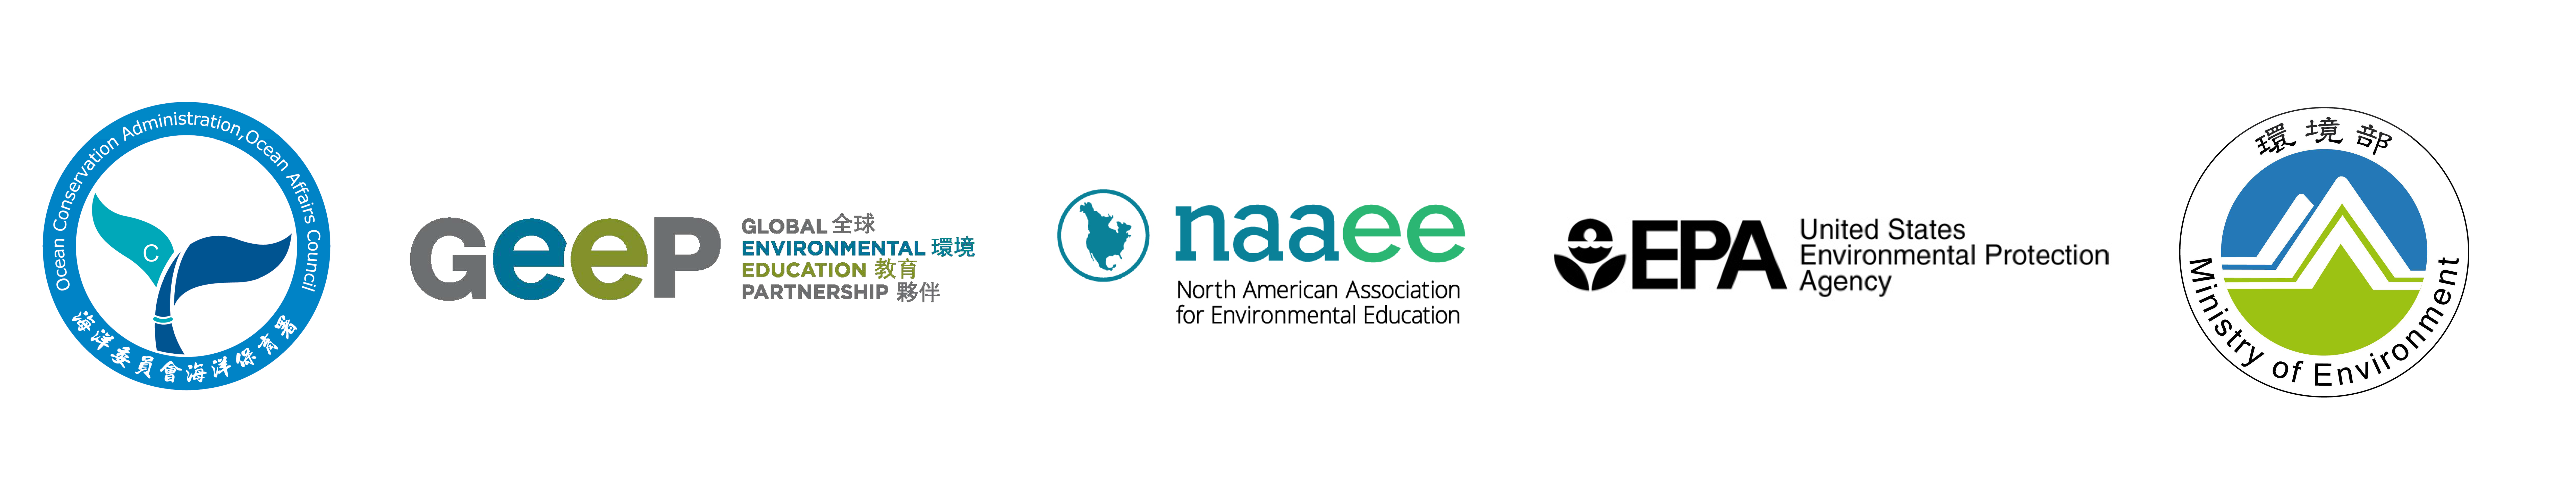 OCA, GEEP, NAAEE, US EPA, and MOENV logos